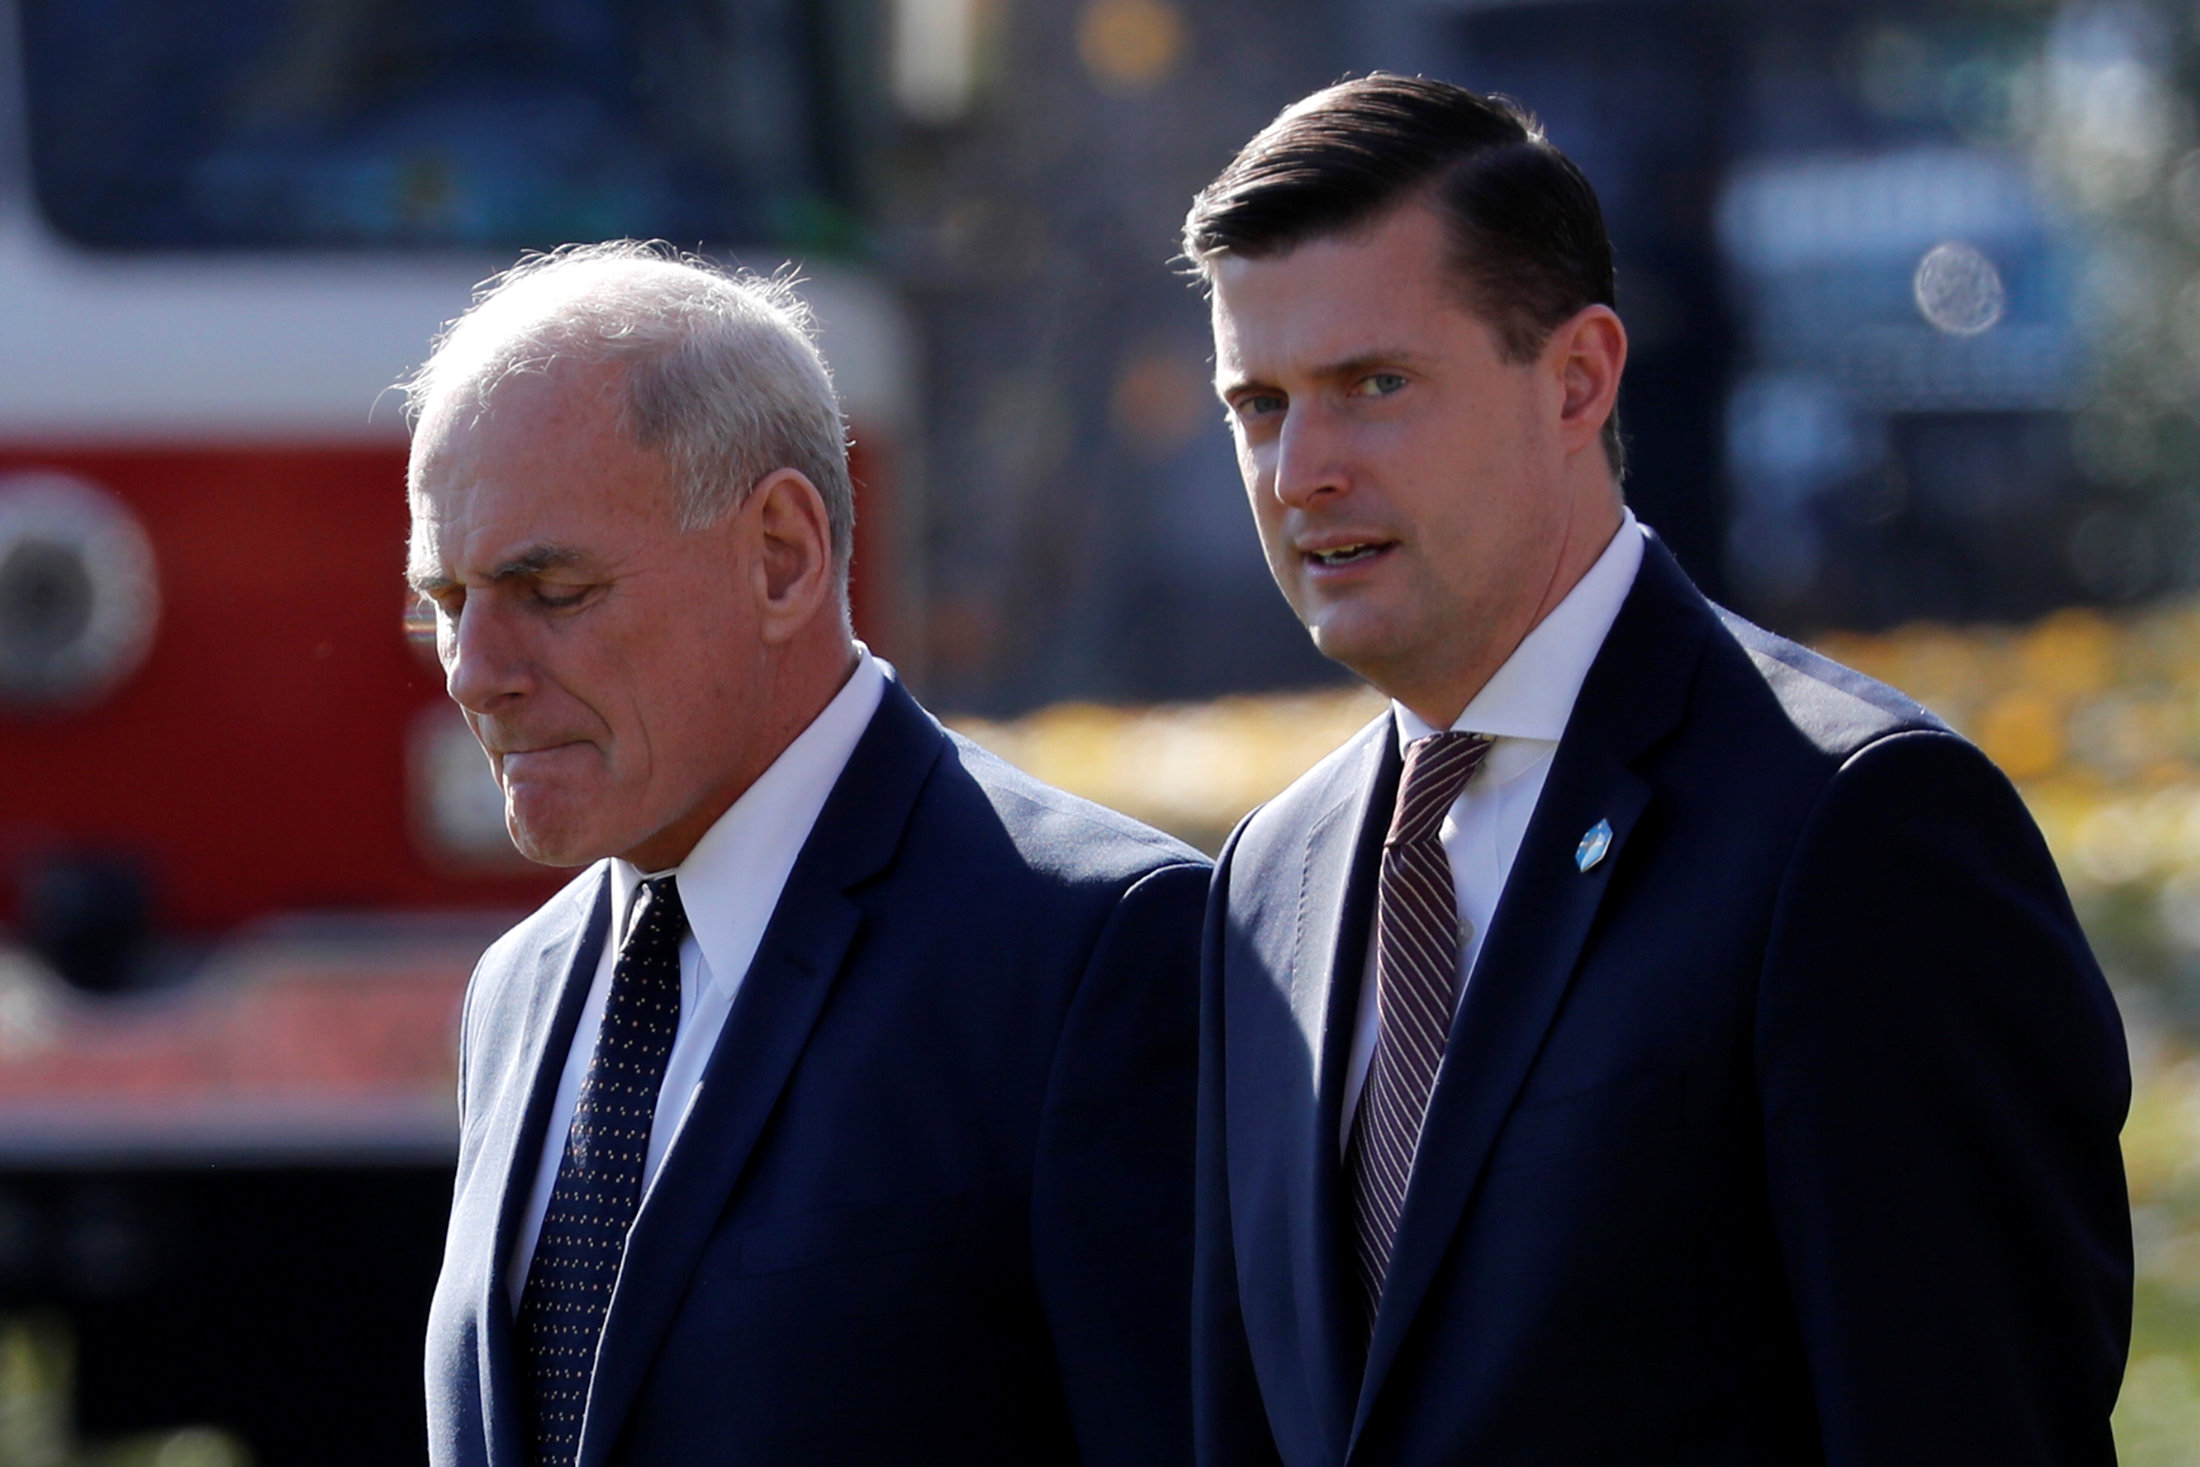 PHOTO: White House Chief of Staff John Kelly walks with White House Staff Secretary Rob Porter in Washington, Nov. 29, 2017.